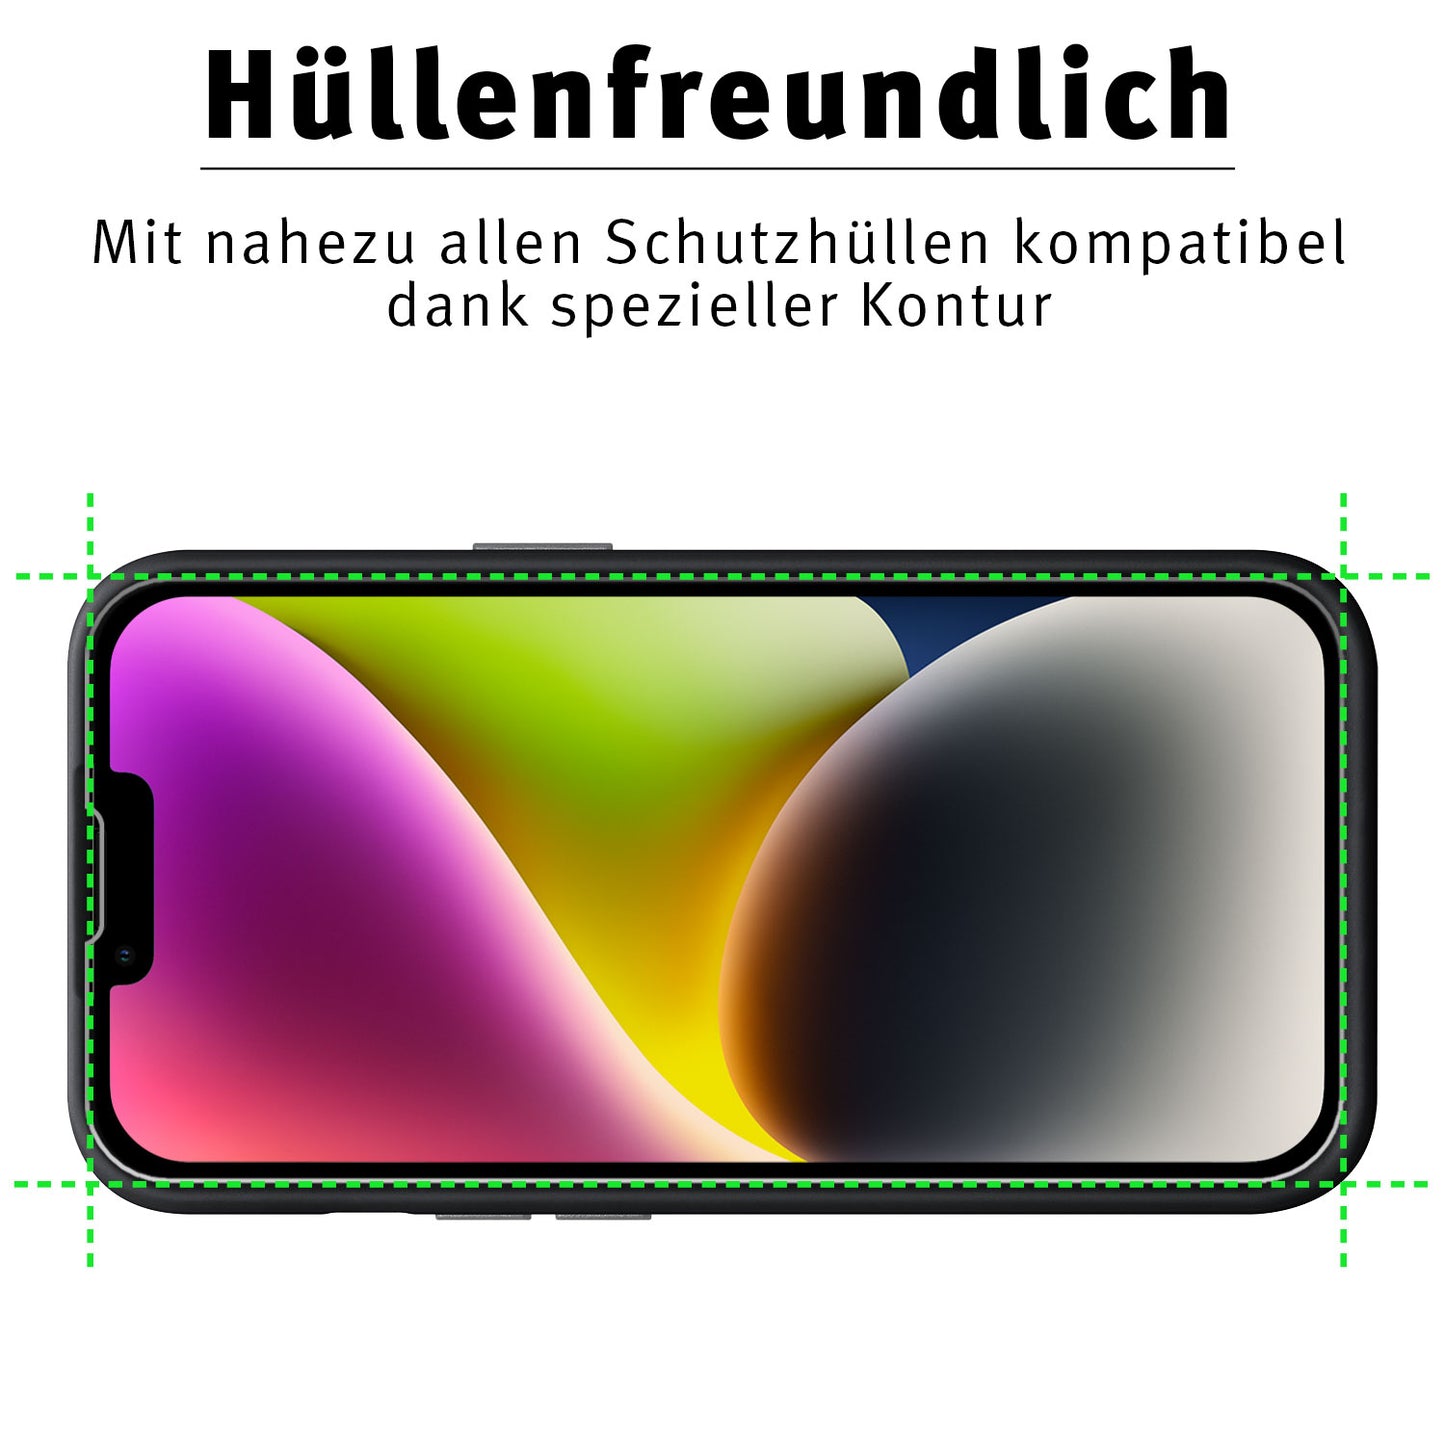 ArktisPRO iPhone 14 Plus Displayschutz GLAS - 3er Set